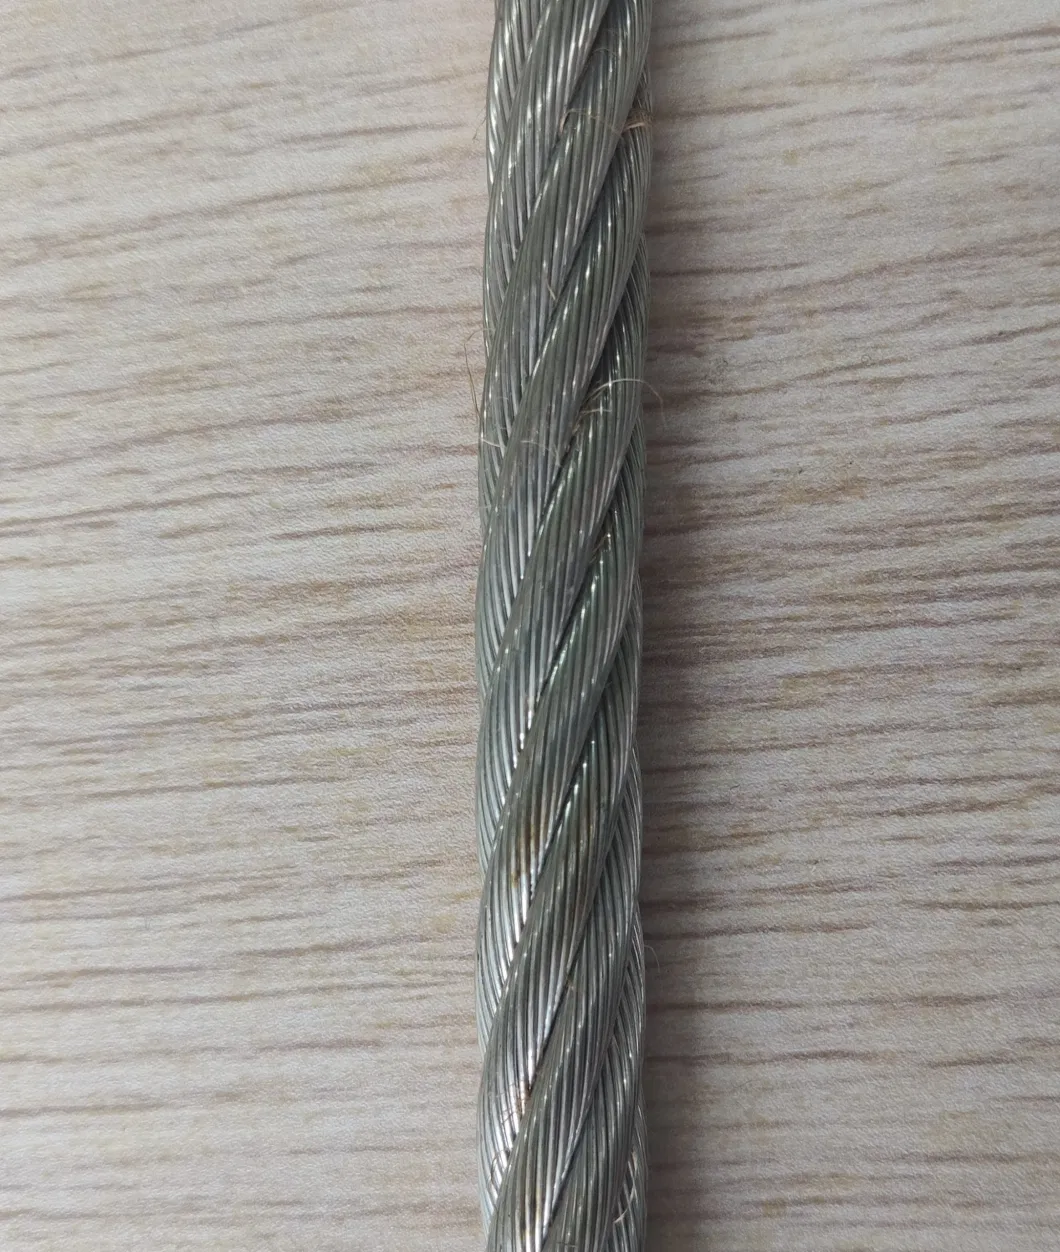 Korean Type Galvanized Steel Wire Rope 6X24+7FC